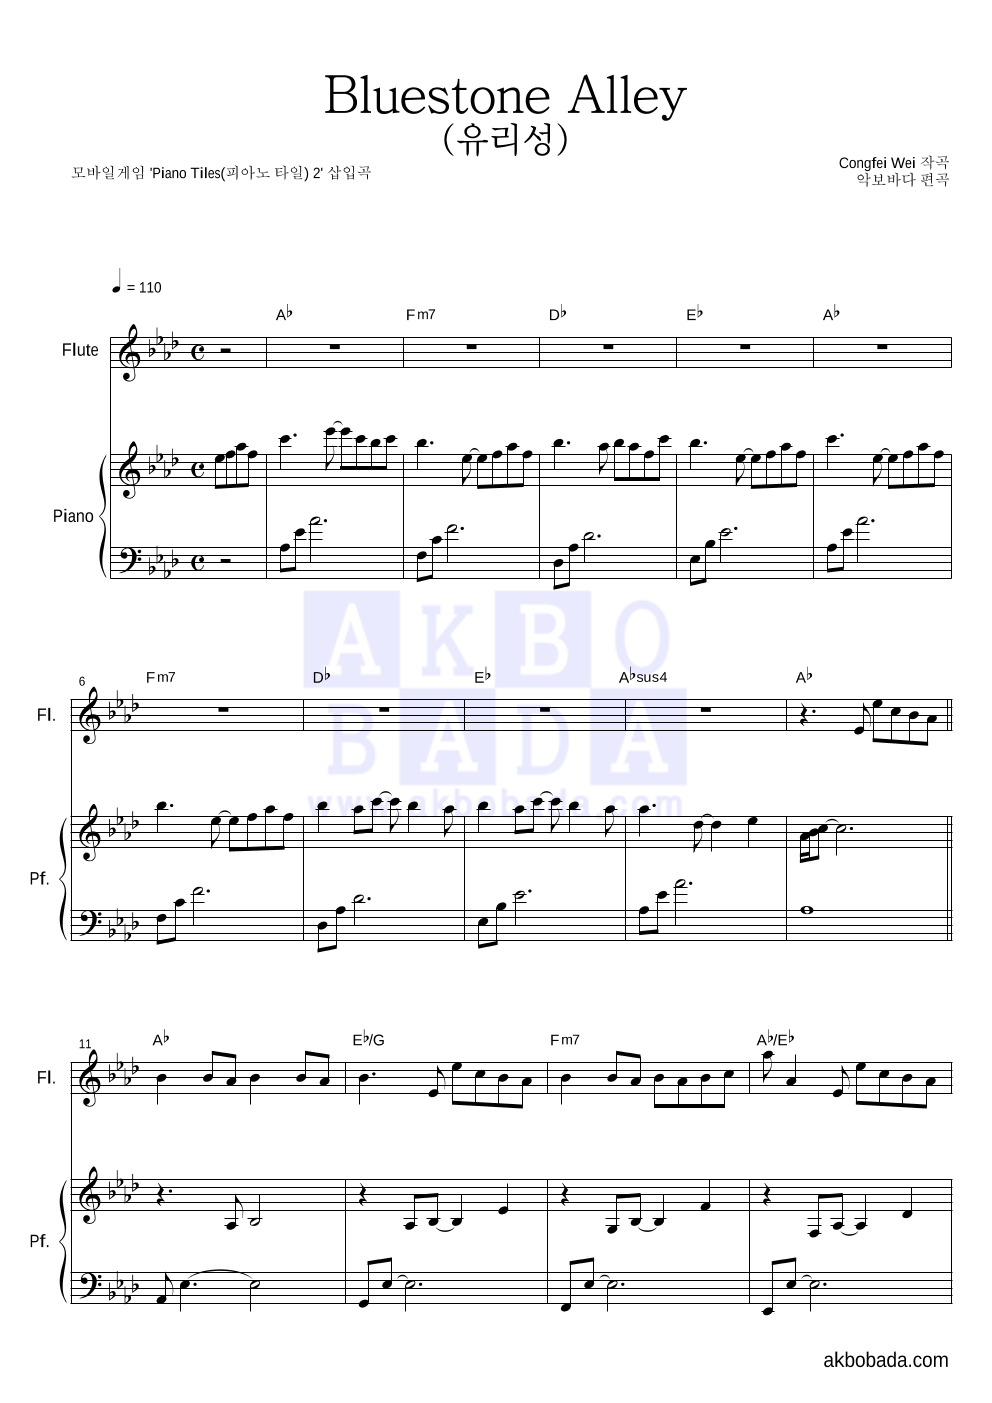 Congfei Wei - Bluestone Alley (유리성) 플룻&피아노 악보 